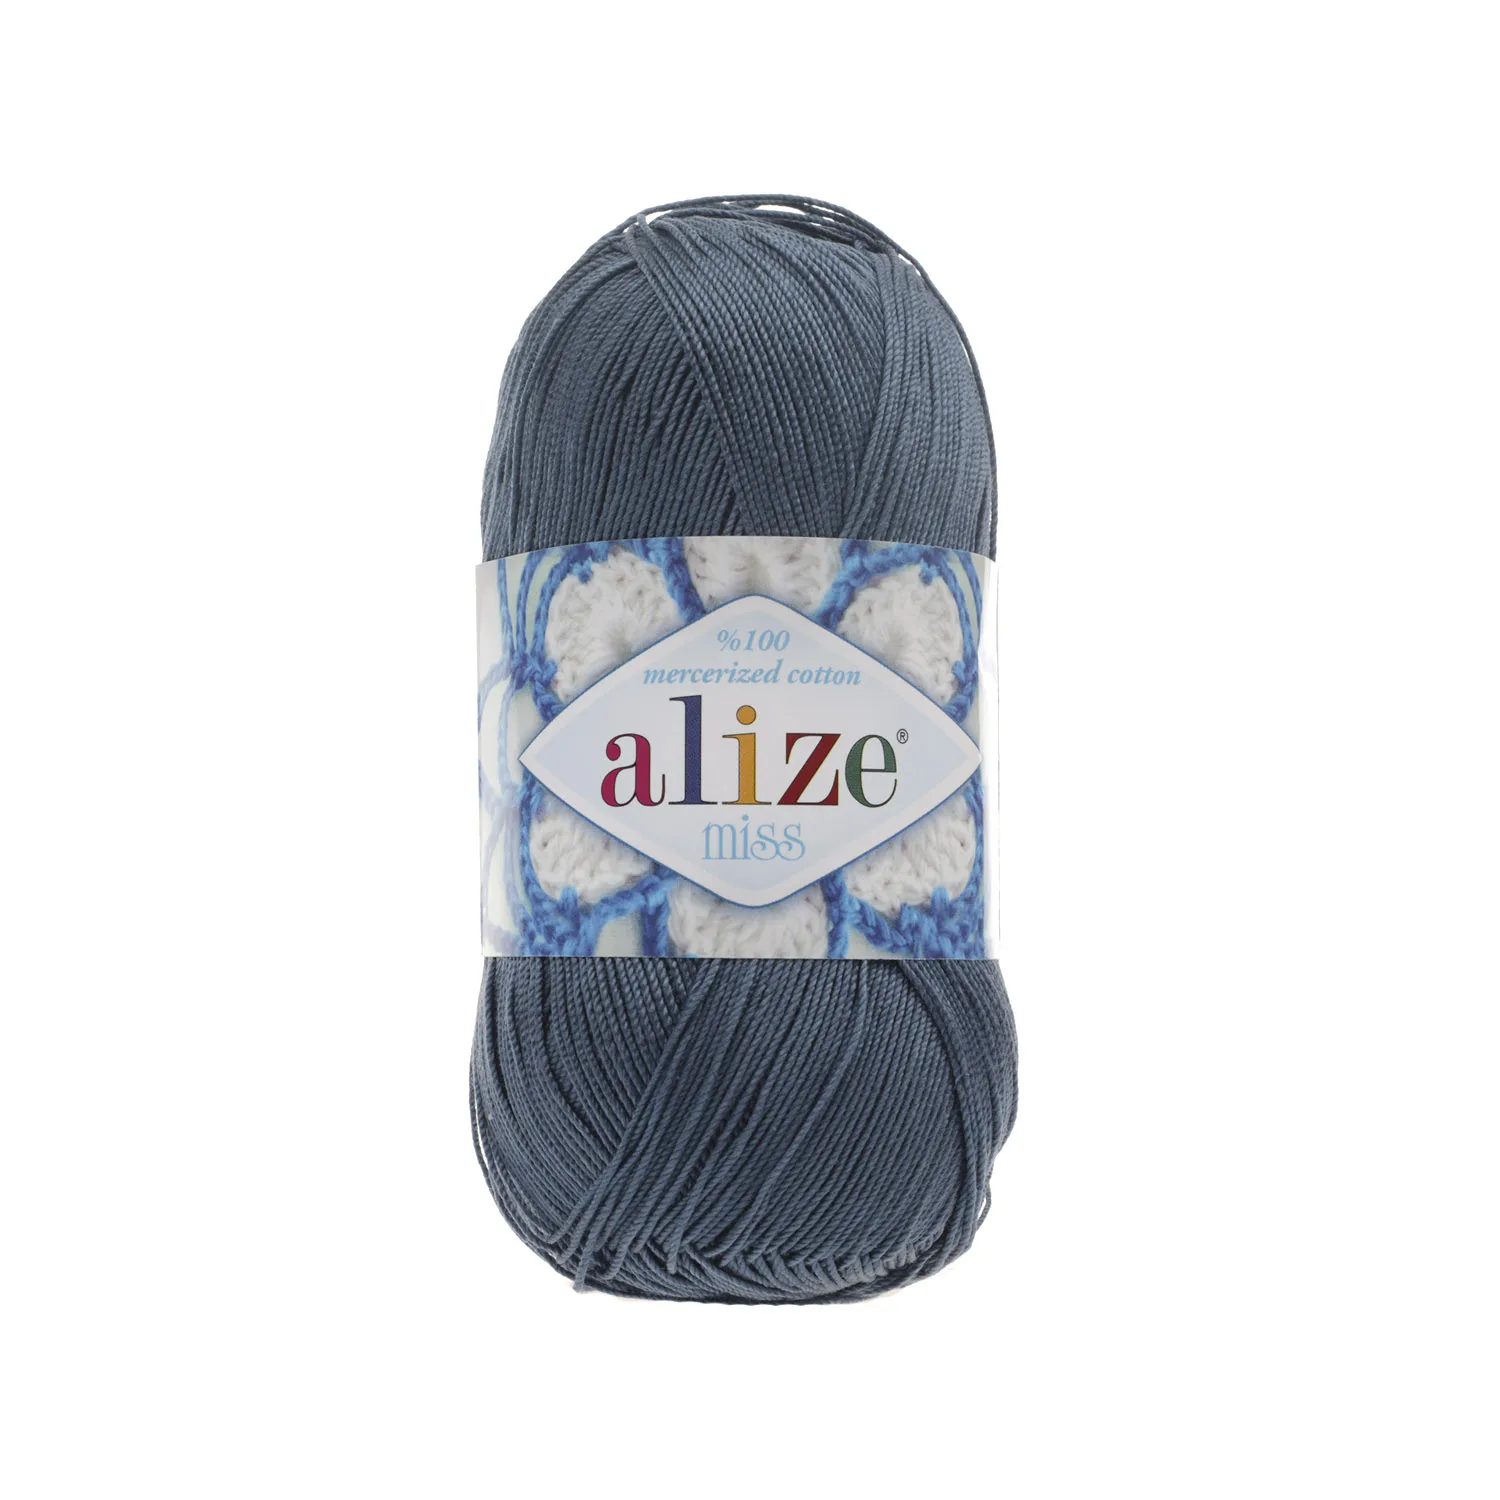 All Knitting Crochet Pattern Shawl, Home Textile,